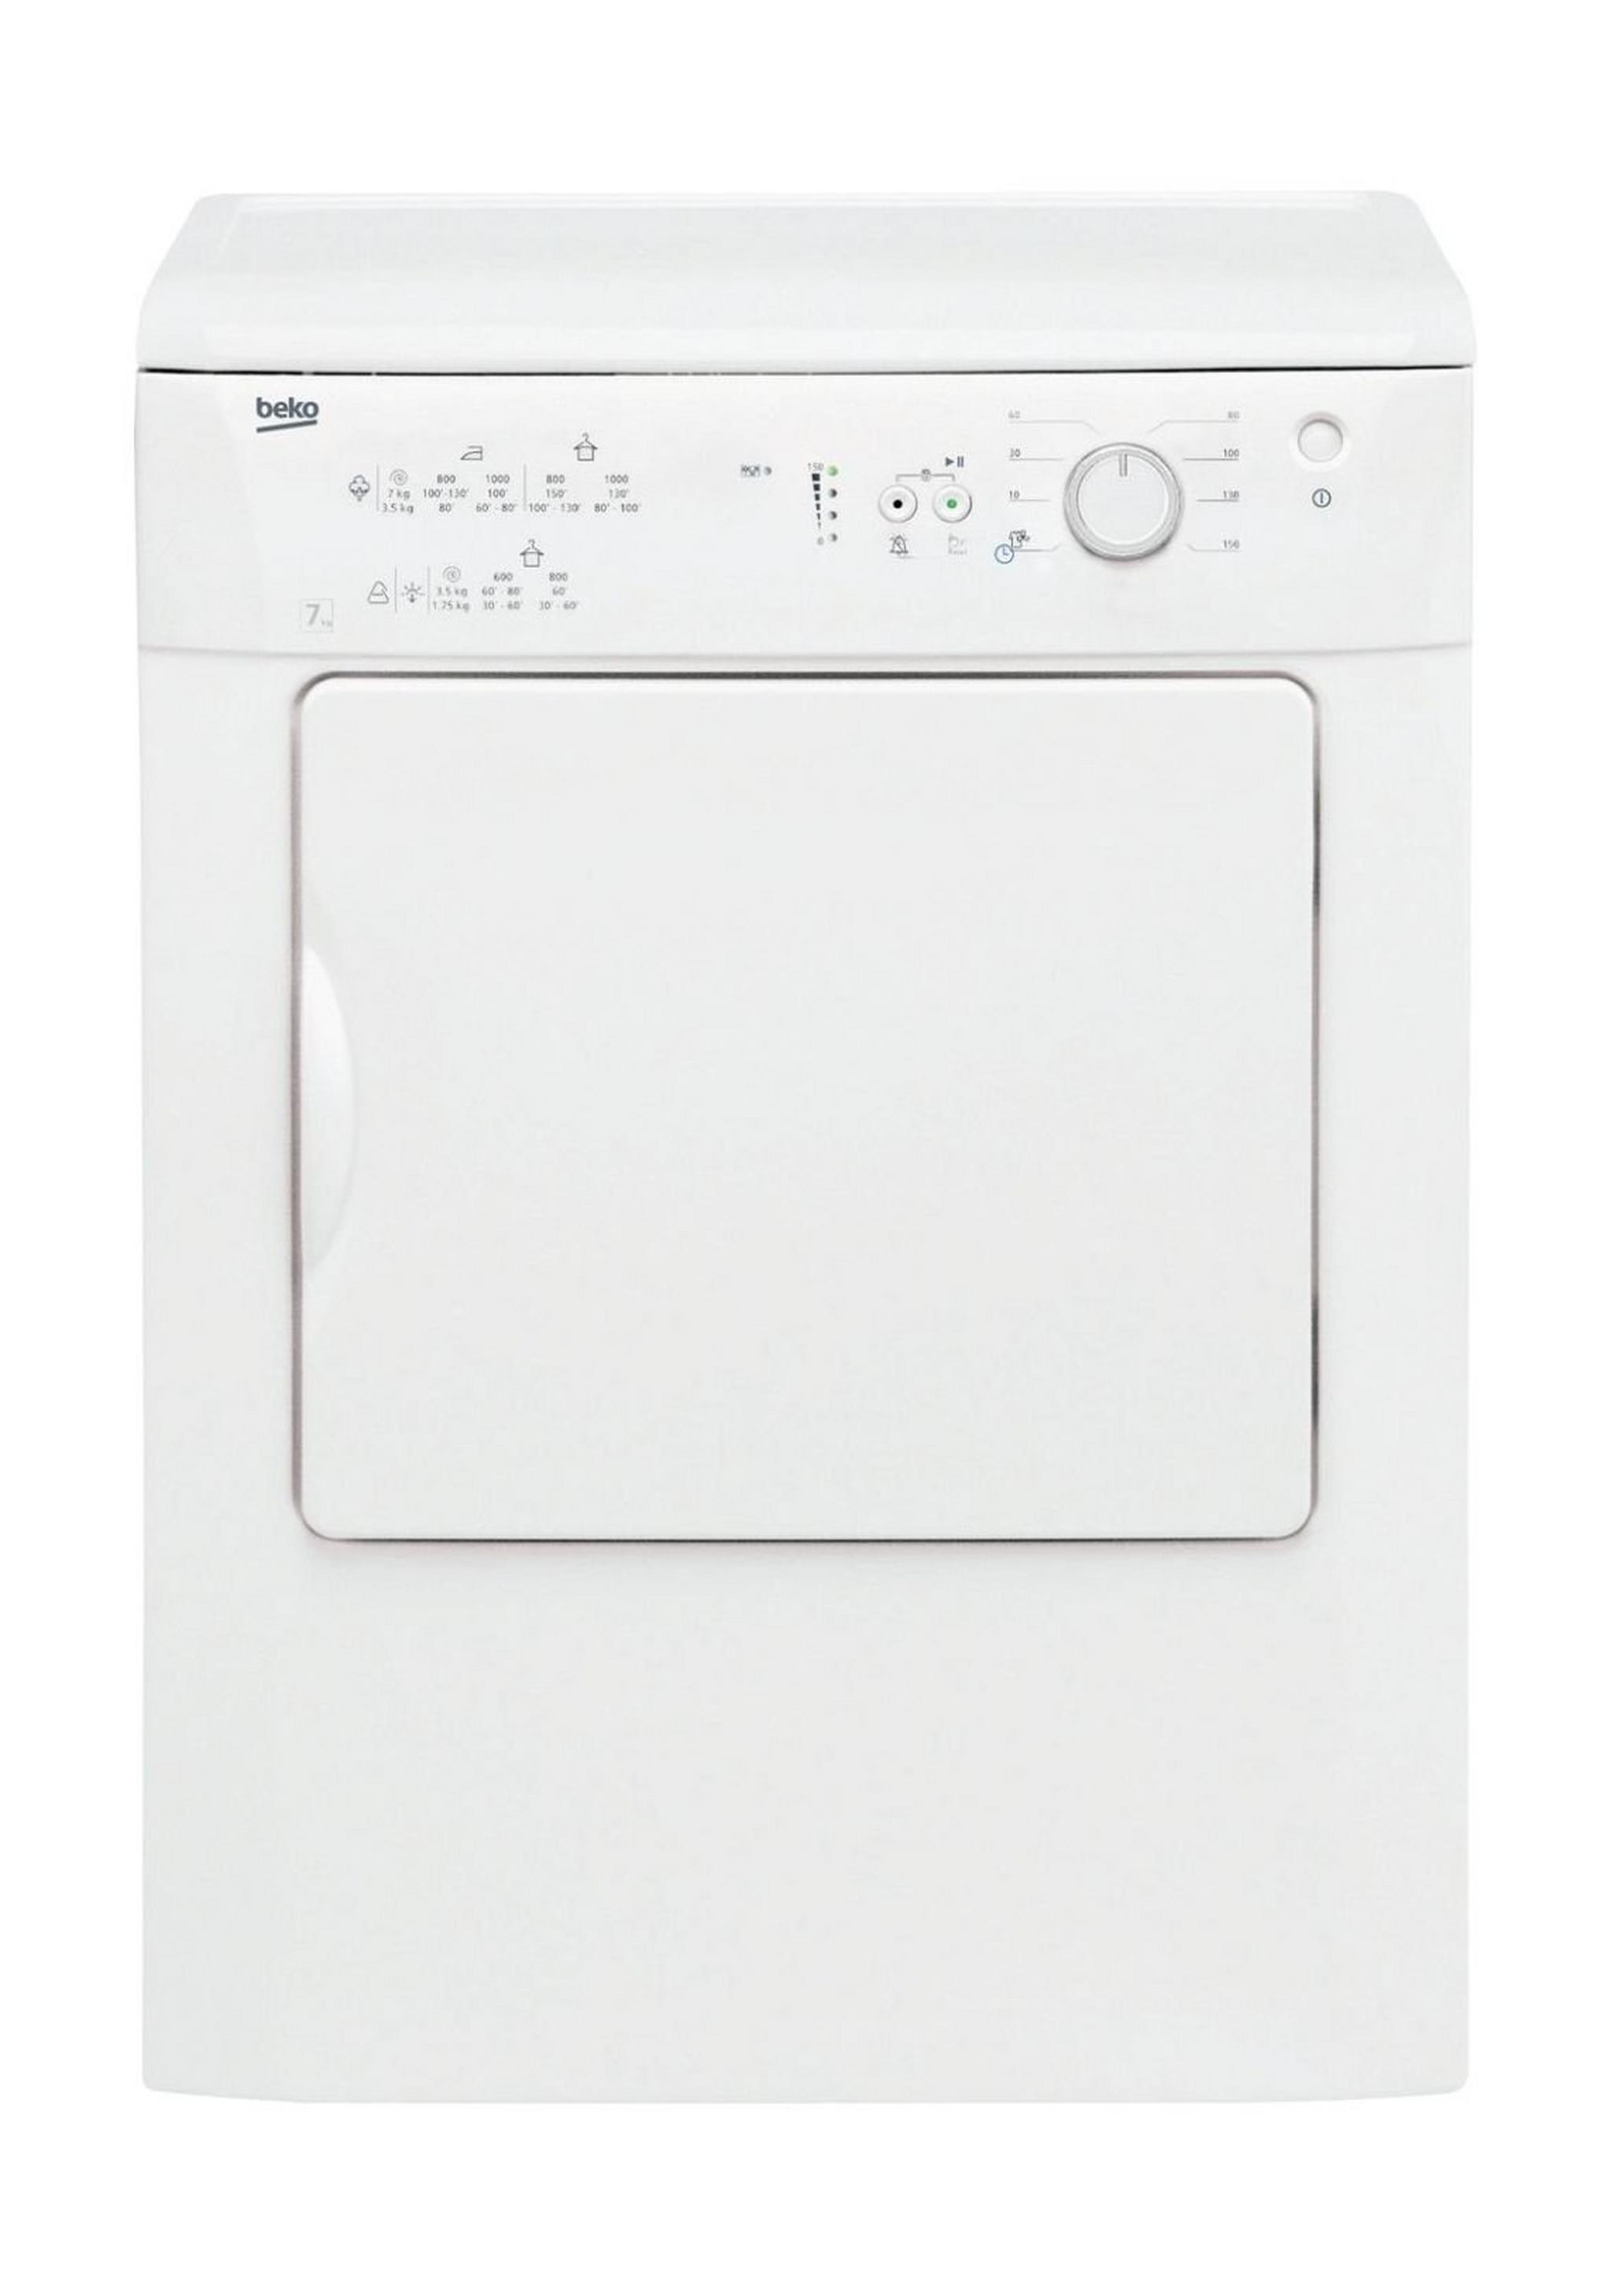 Beko 7kg Front Load Vented Dryer (DV 7110) – White